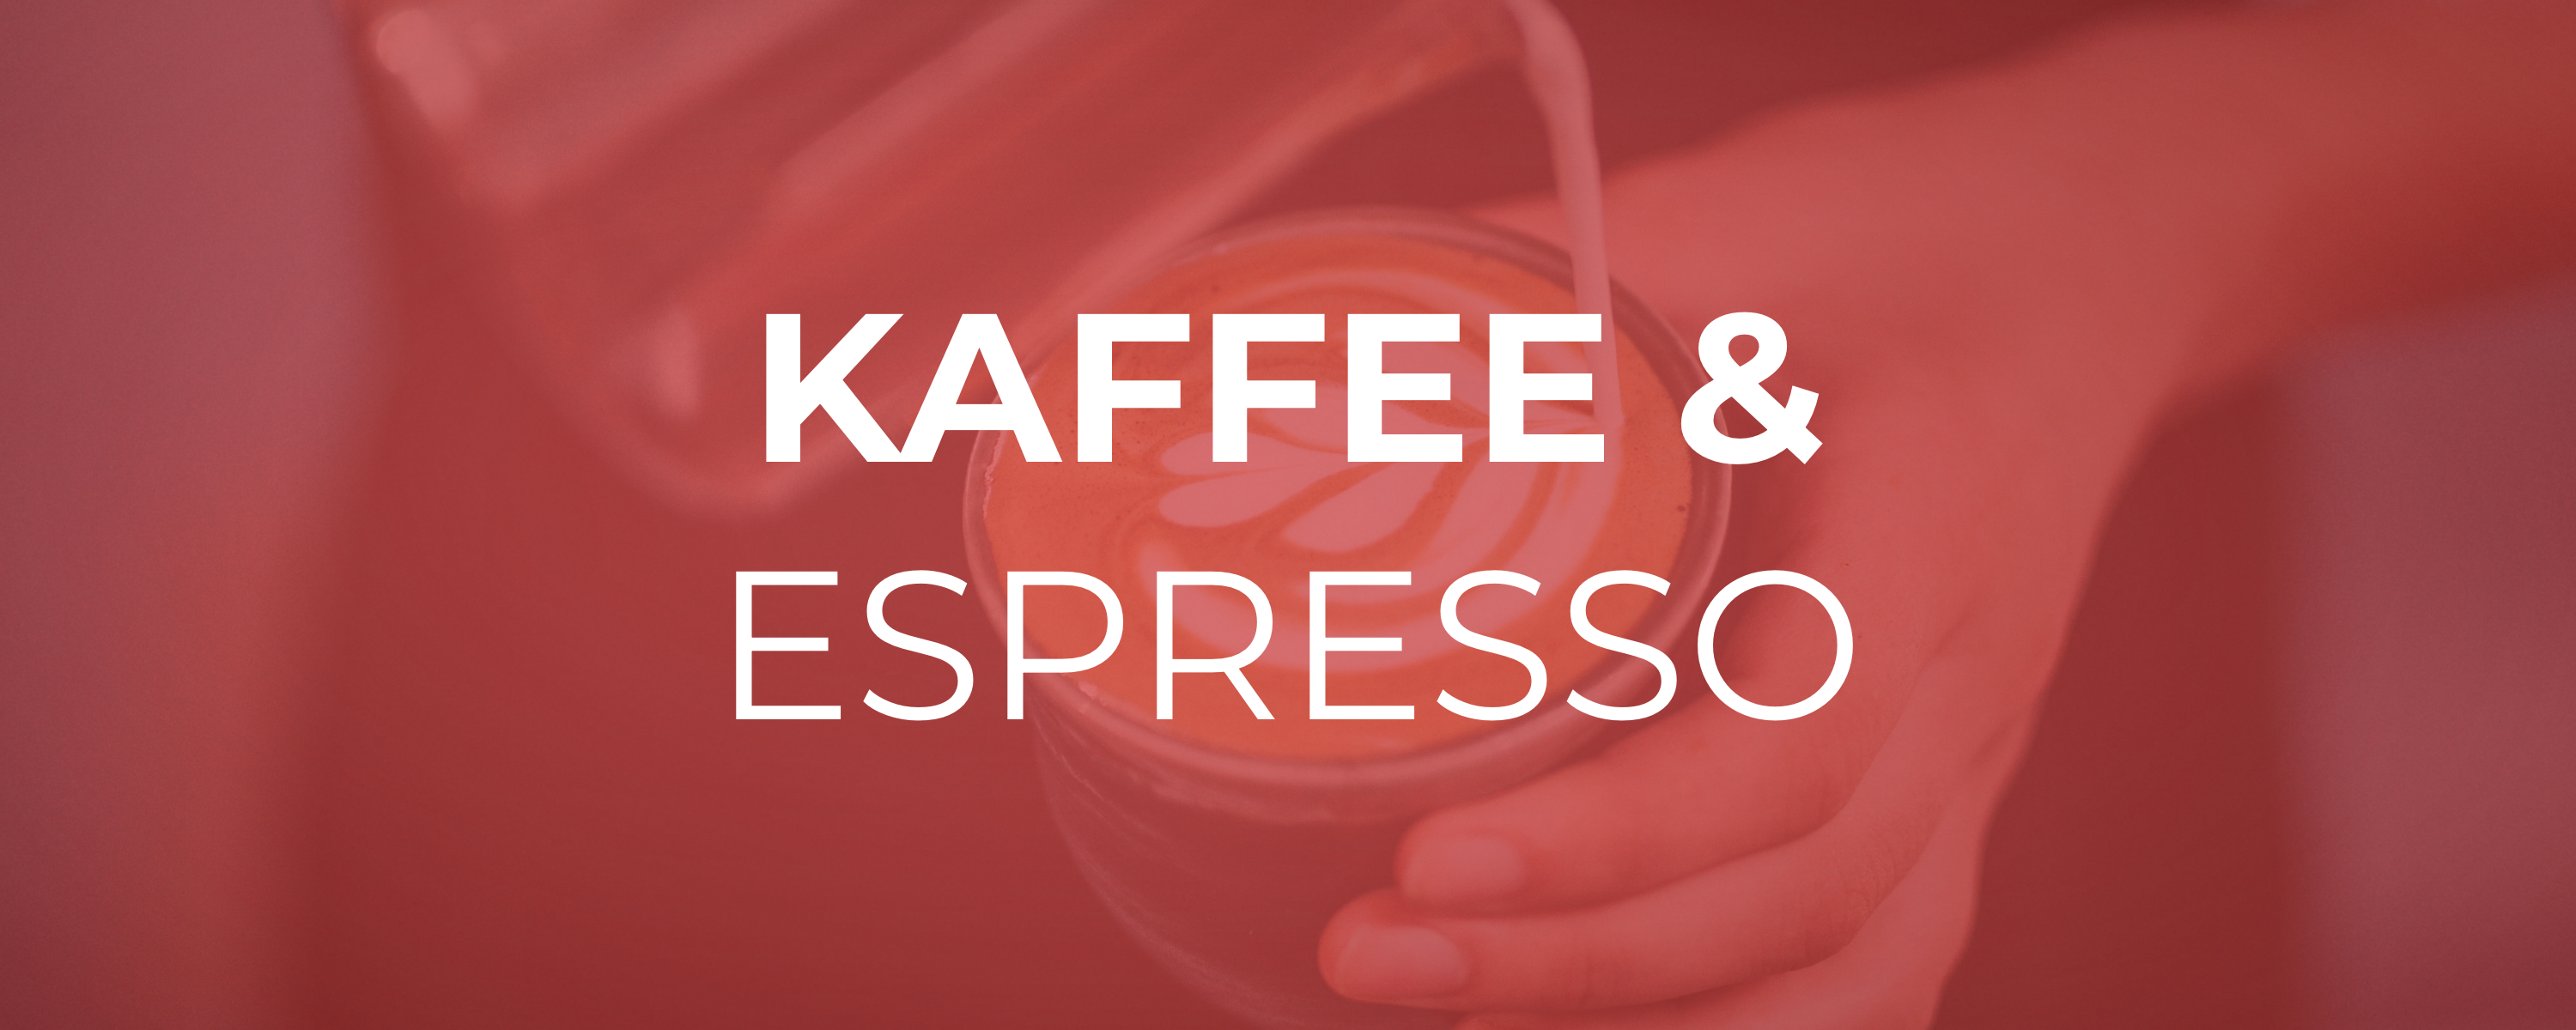 gastronomie_kaffee_espresso-kategorie_gastrodeals